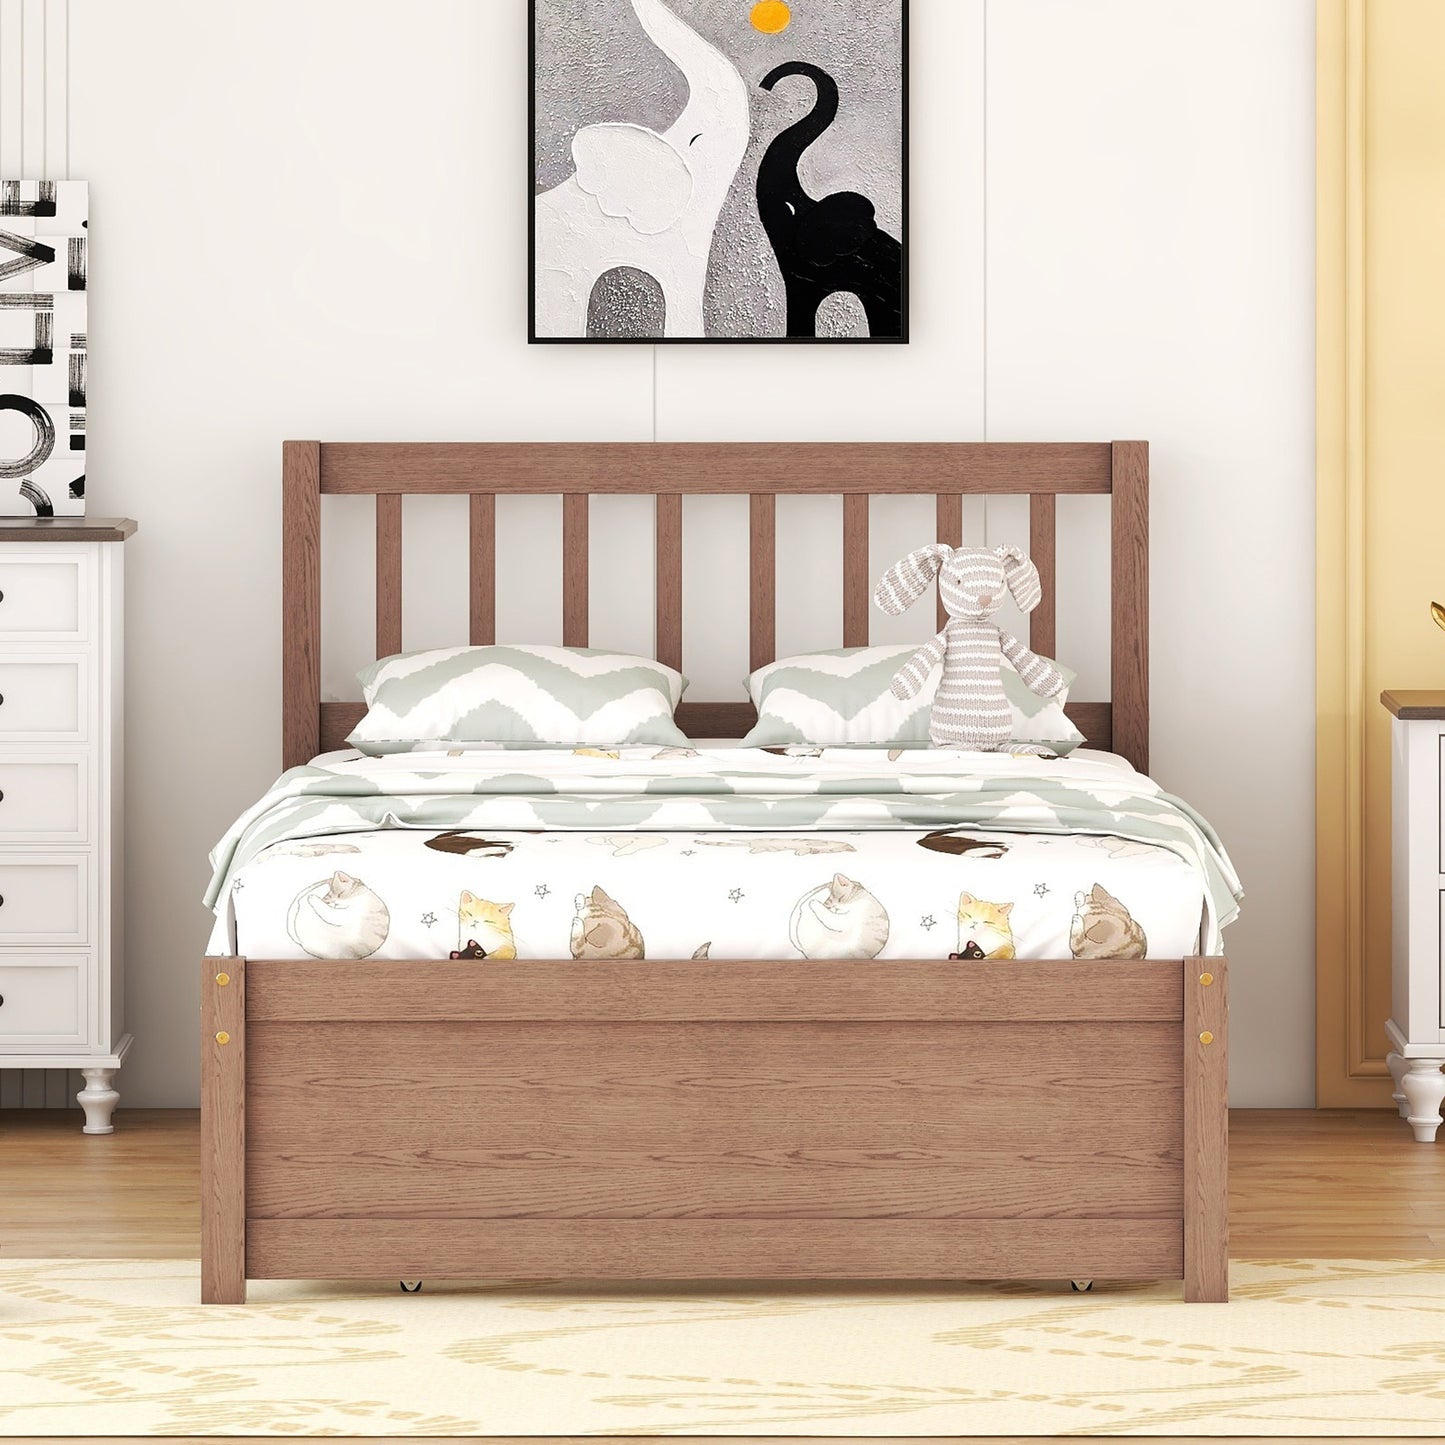 Modern Design Wooden Twin Size Platform Bed Frame with Trundle for Walnut Color